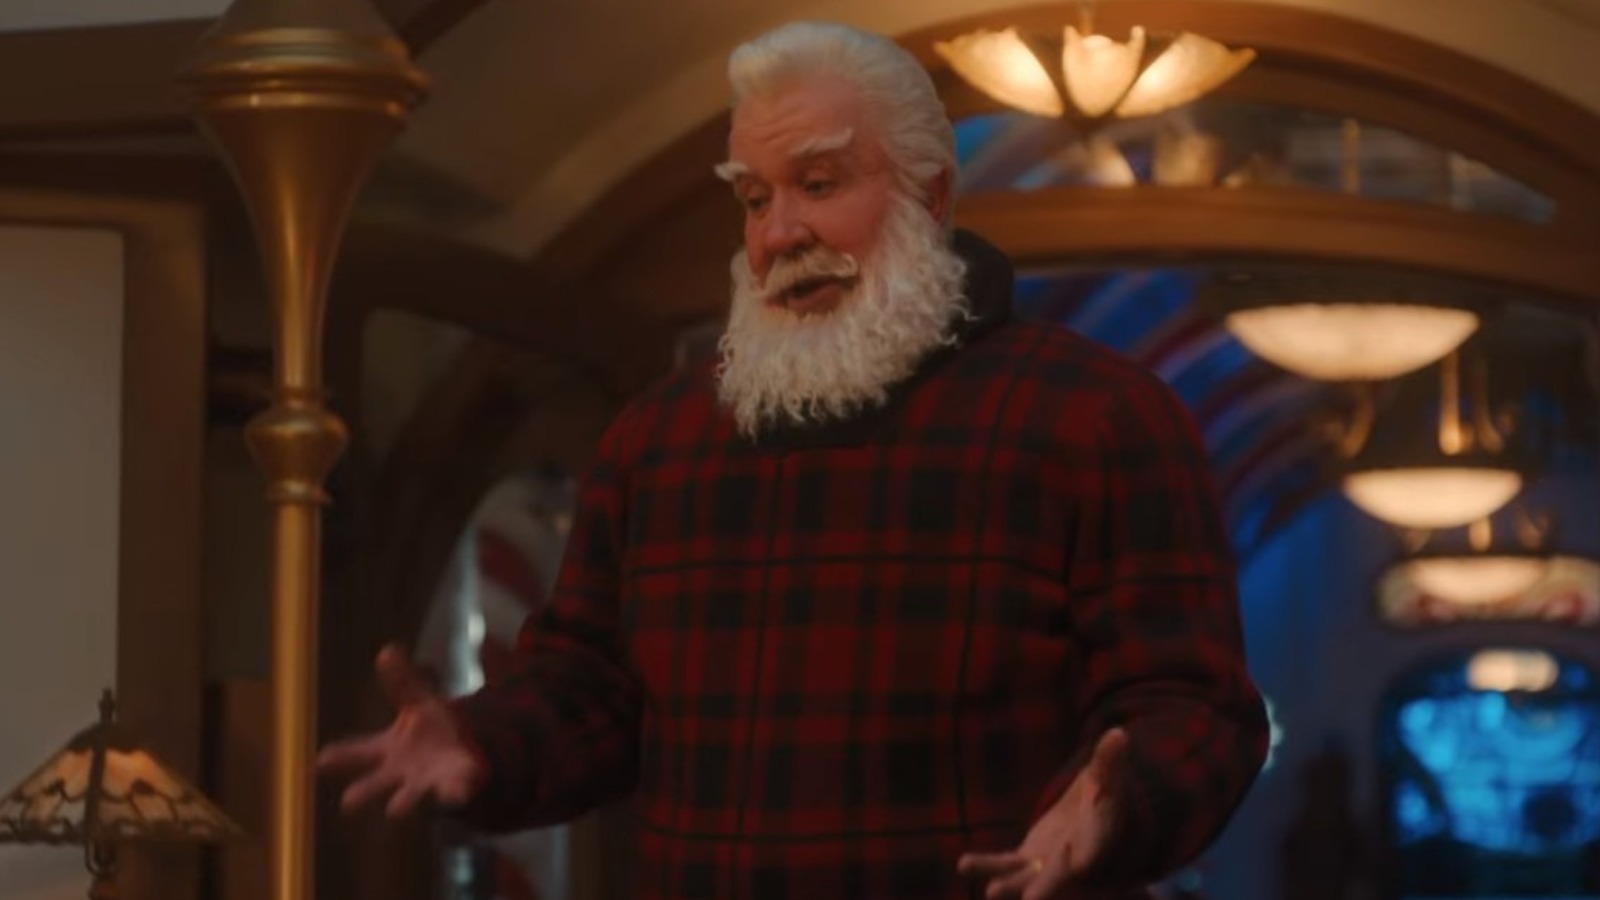 the santa clause tim allen beard